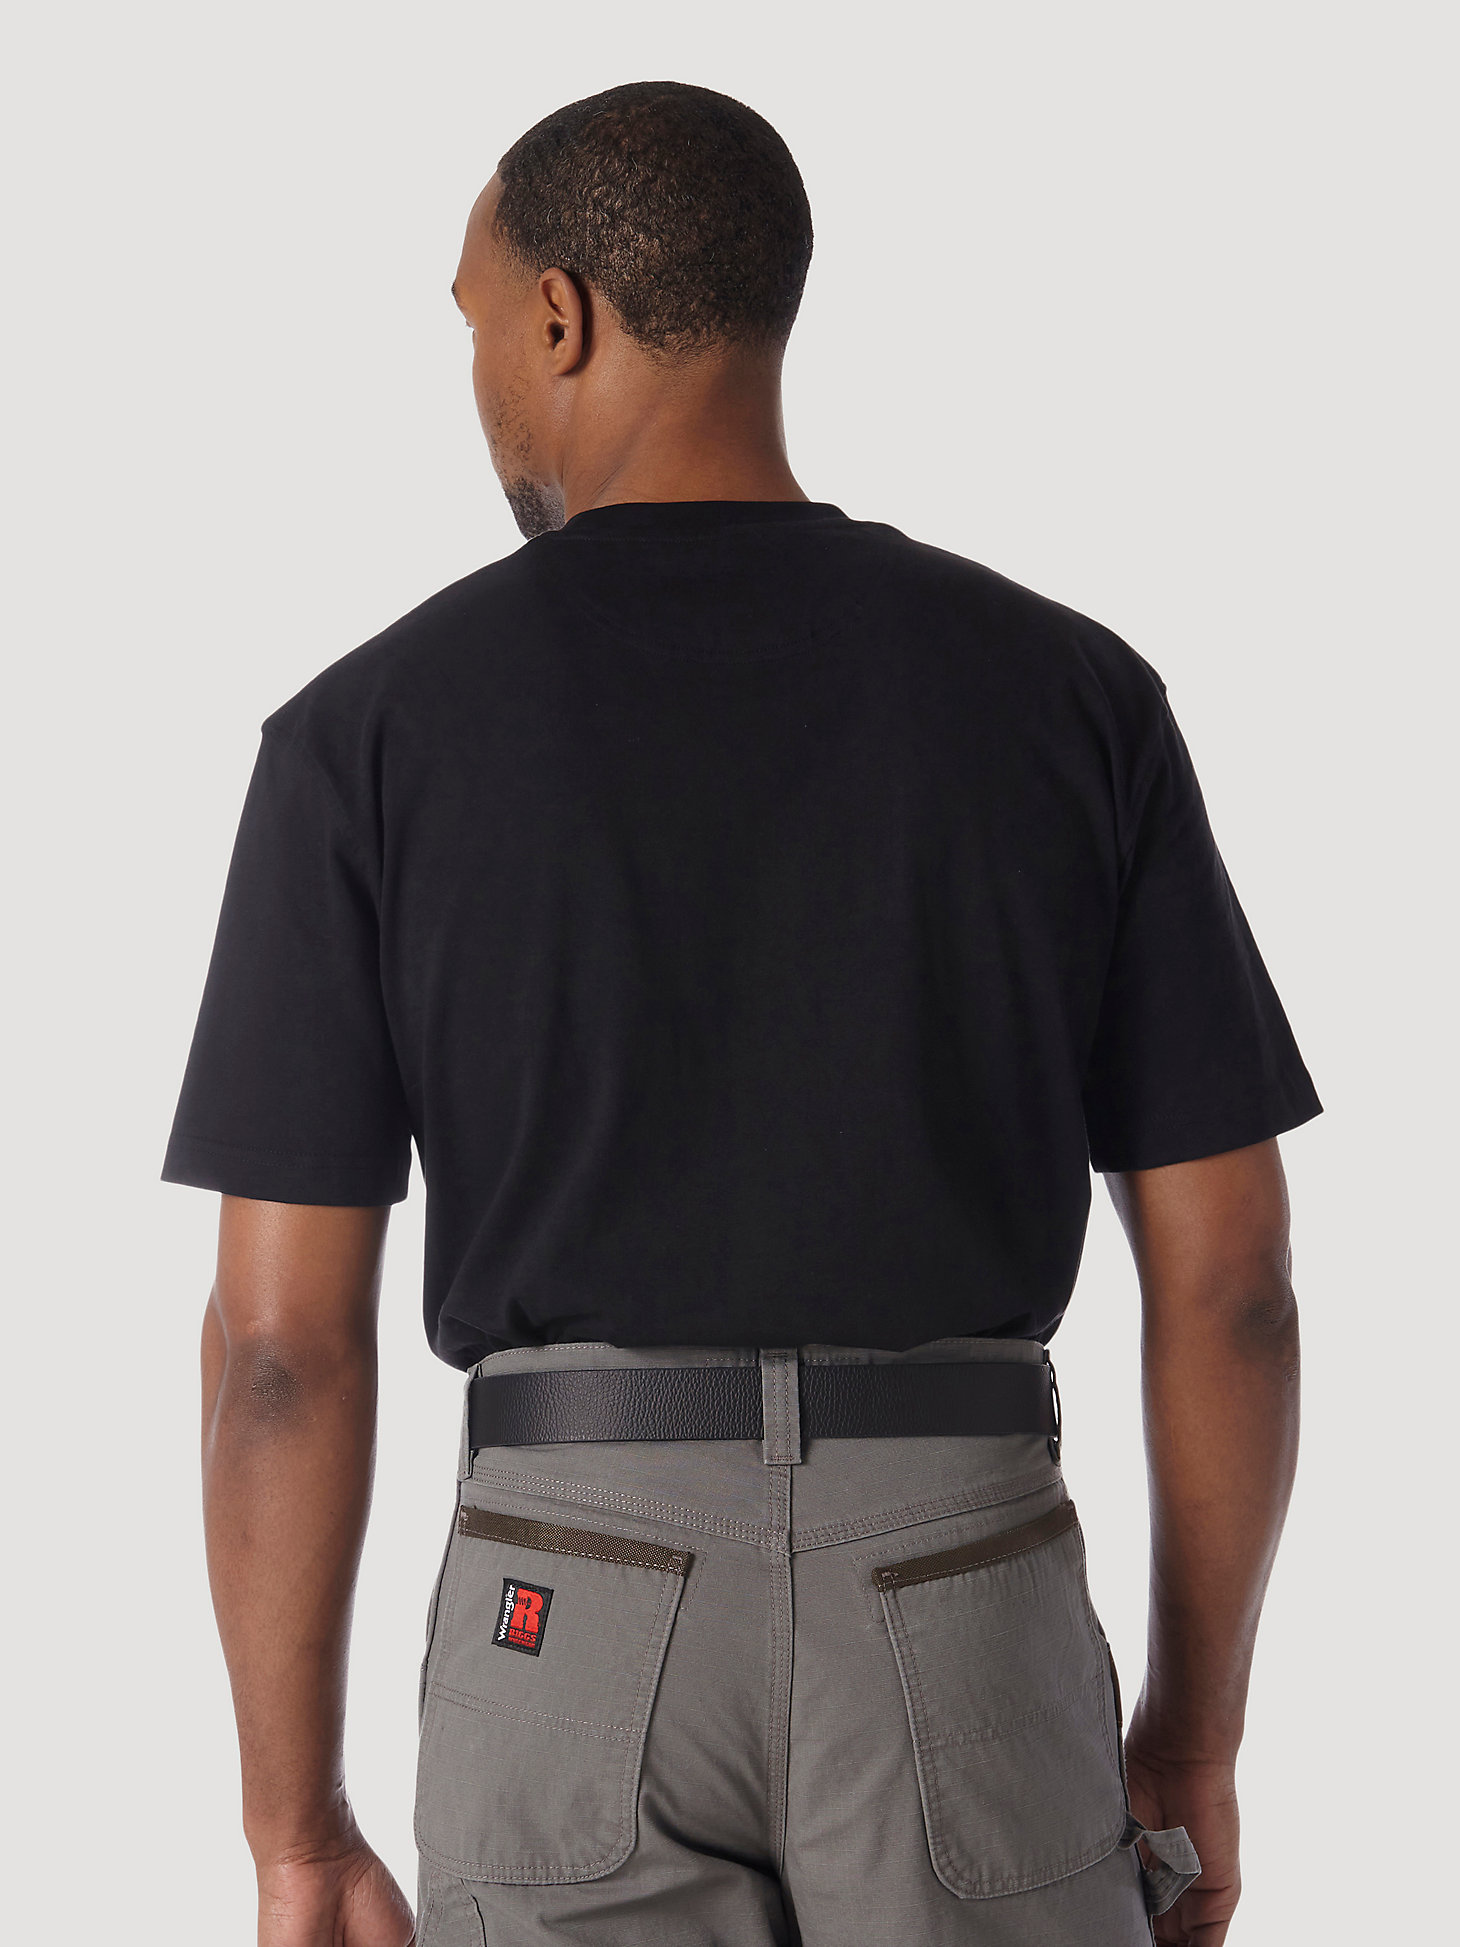 Wrangler Riggs Workwear Men's Long Sleeve Pocket T-Shirt 